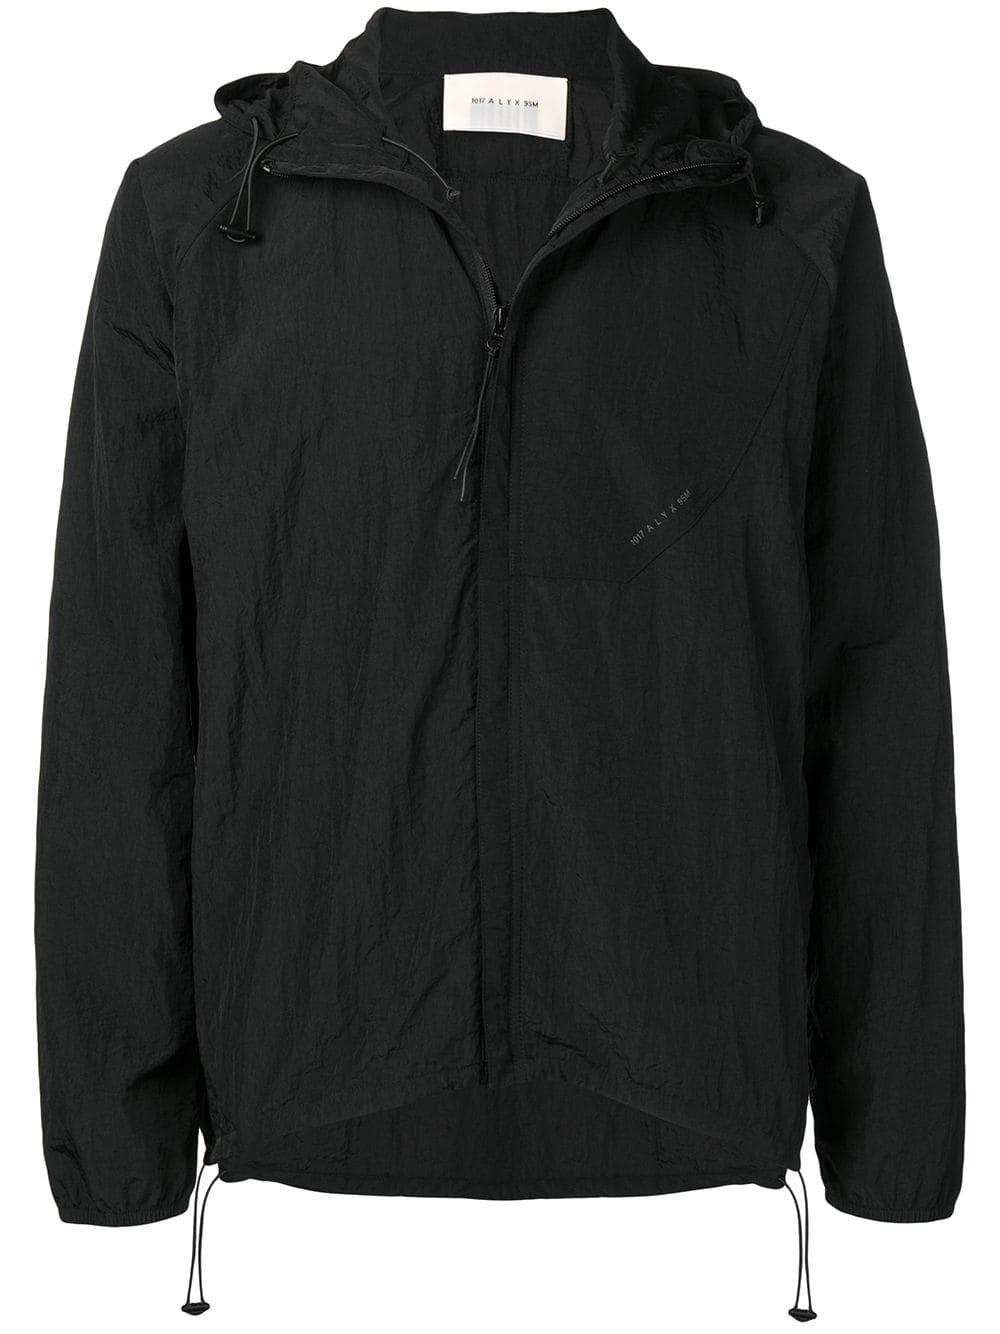 1017 ALYX 9SM Hooded Lightweight Jacket in Black for Men - Lyst